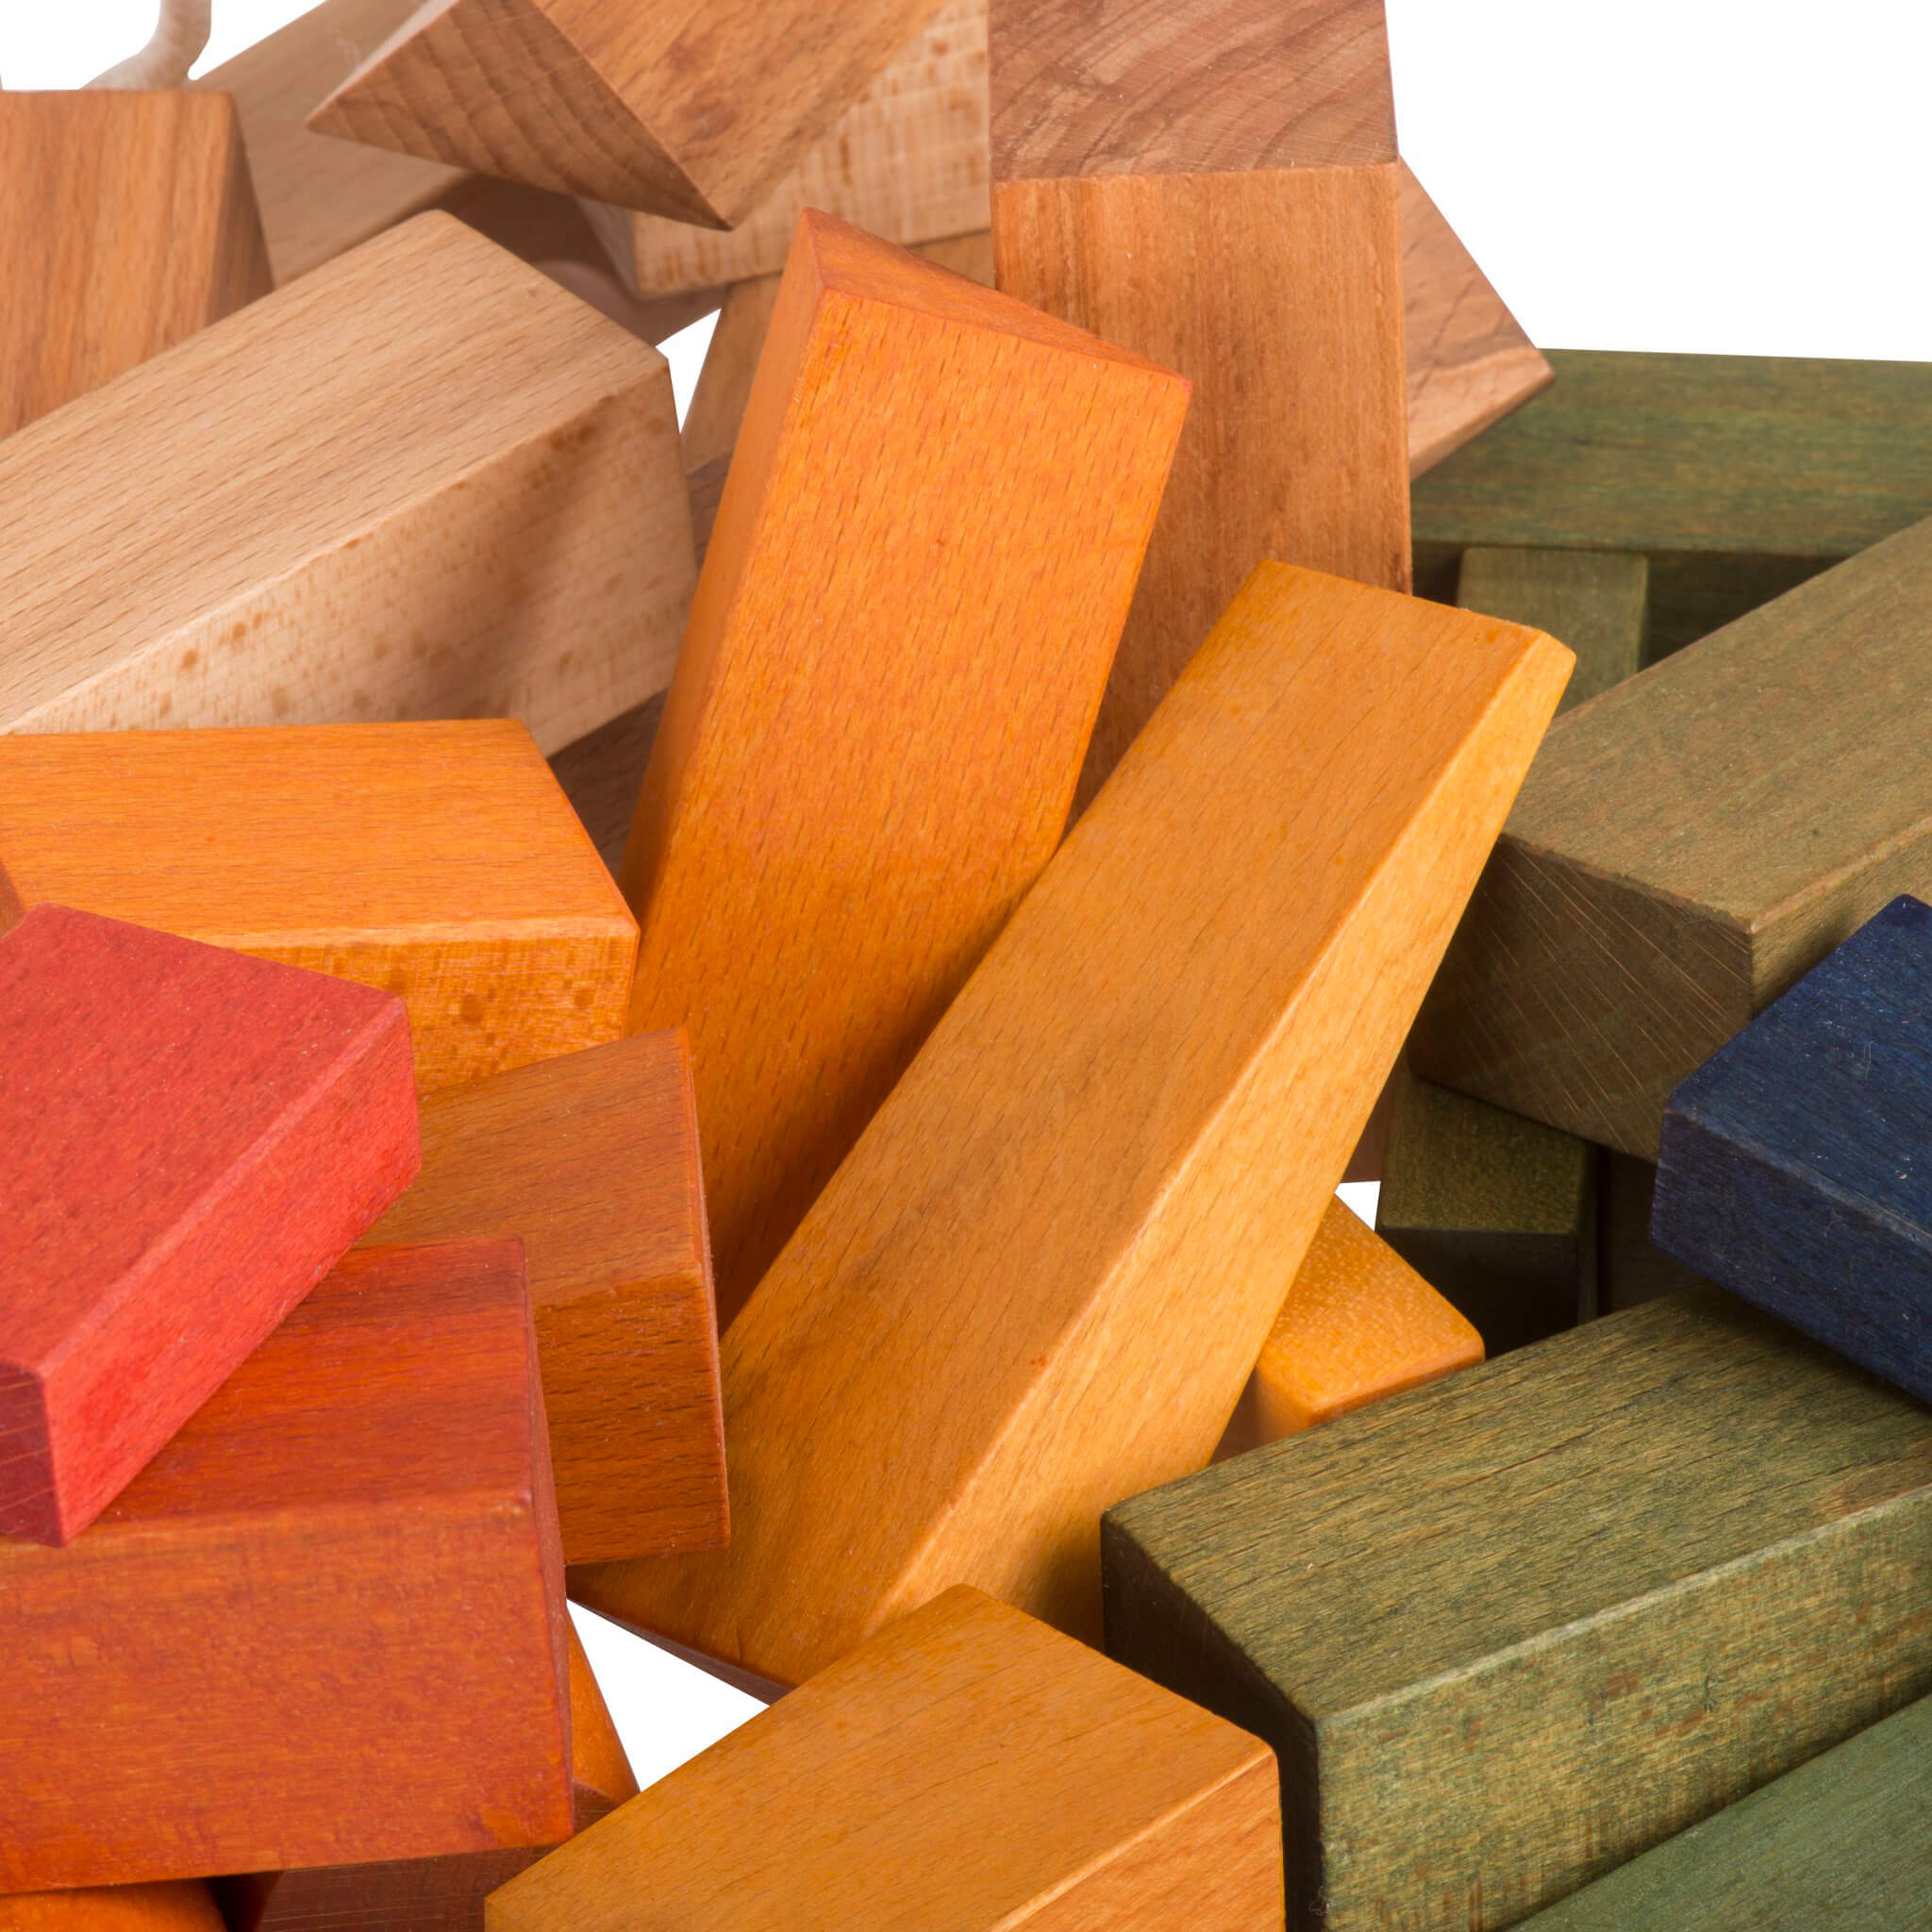 Rainbow Wooden Building Blocks - 50 pieces